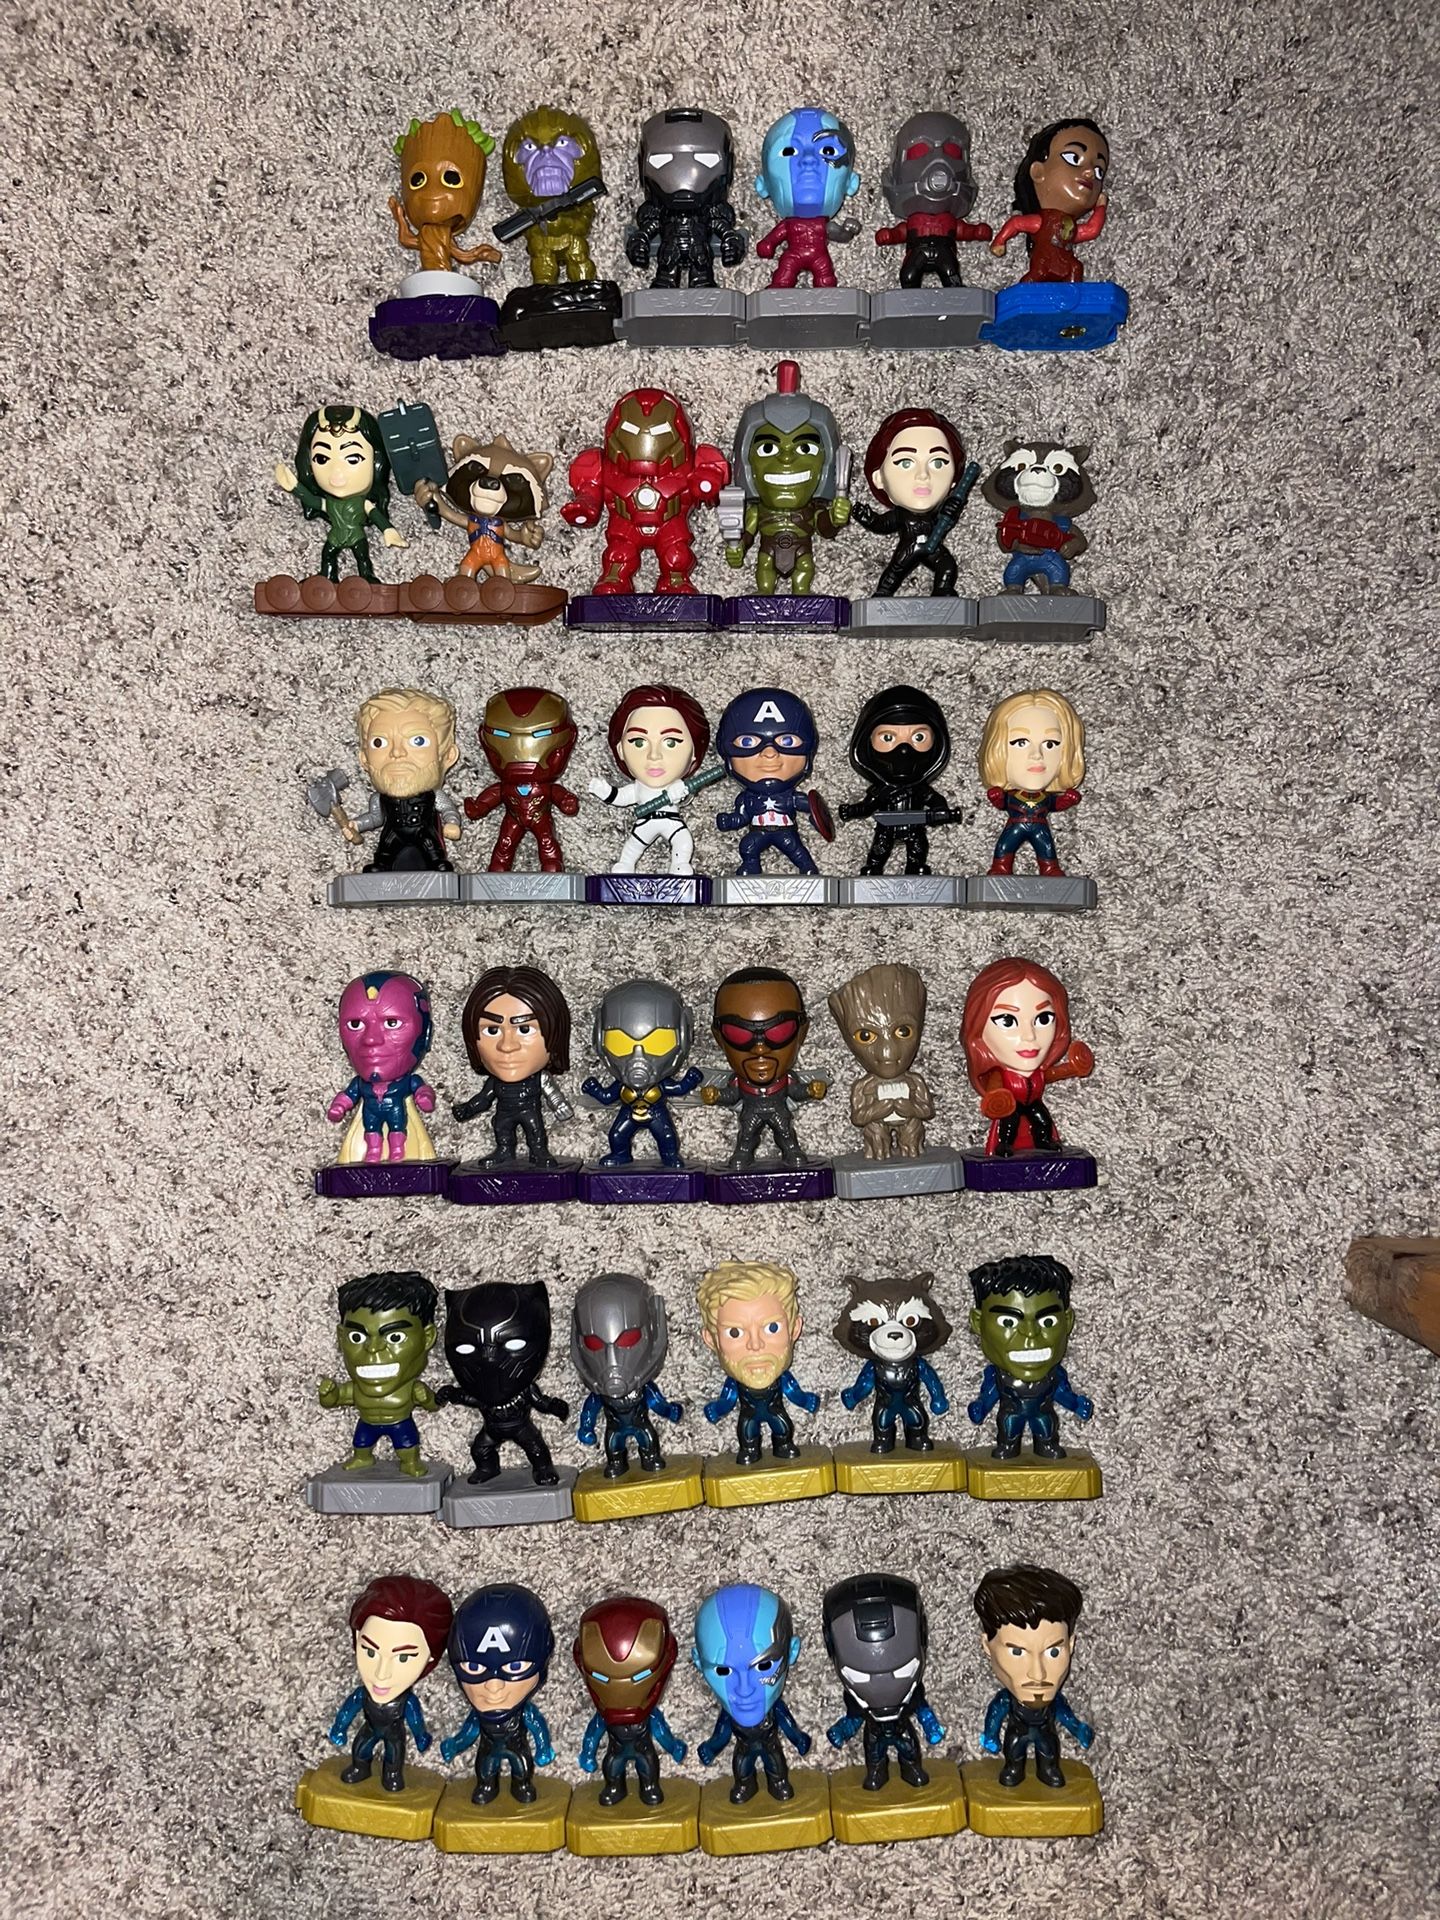 McDonald’s Marvel Avengers Endgame Figure Toys Complete Set With Extras Iron Man Captain America Thor Hulk Black Widow Spider-Man